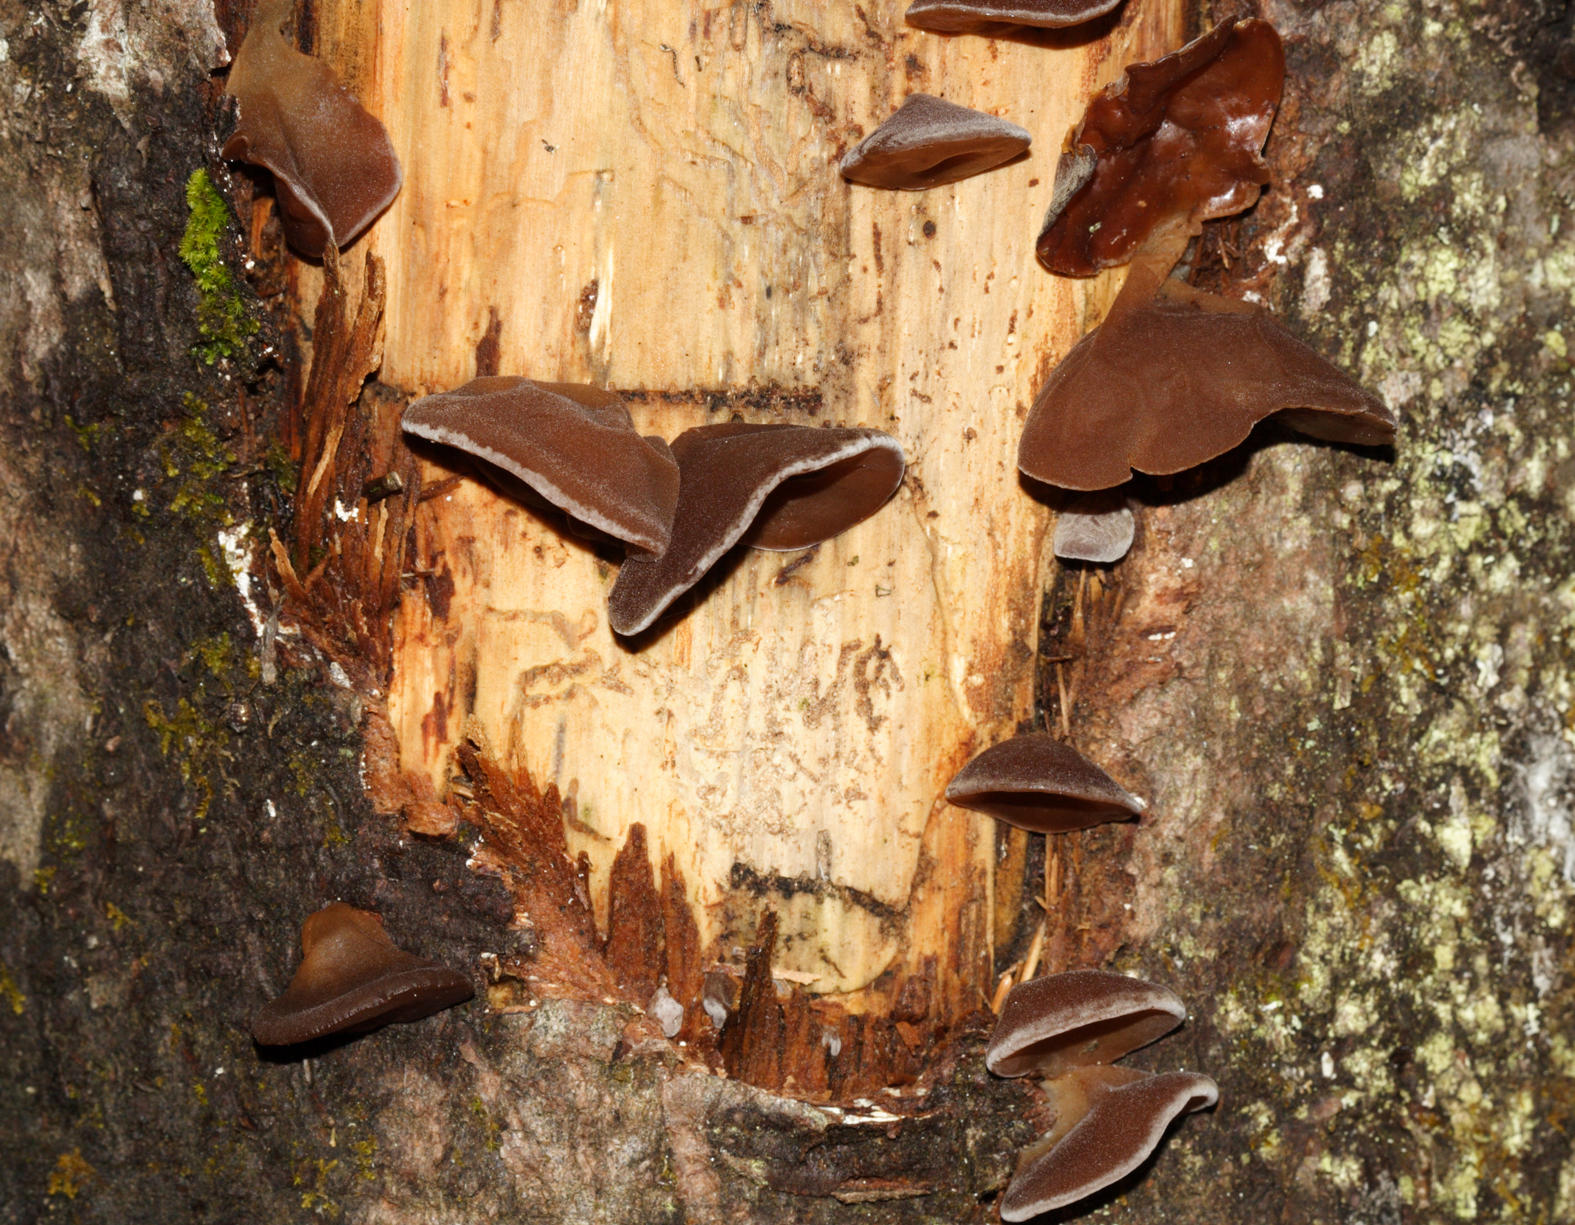 Wood Ear Fungi - Auricularia sp.